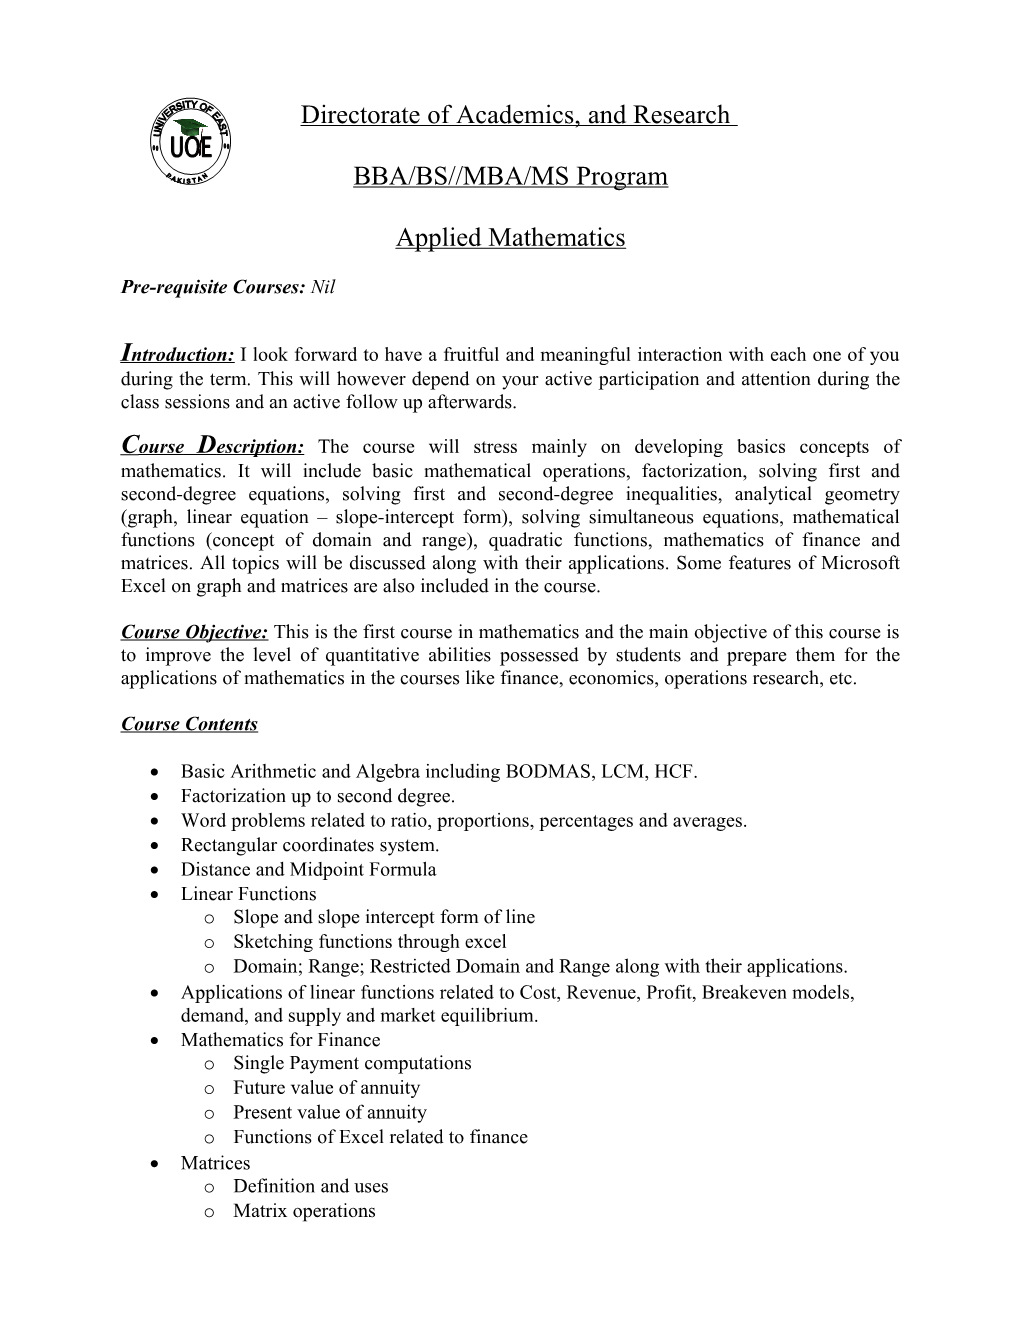 BBA/BS MBA/MS Program